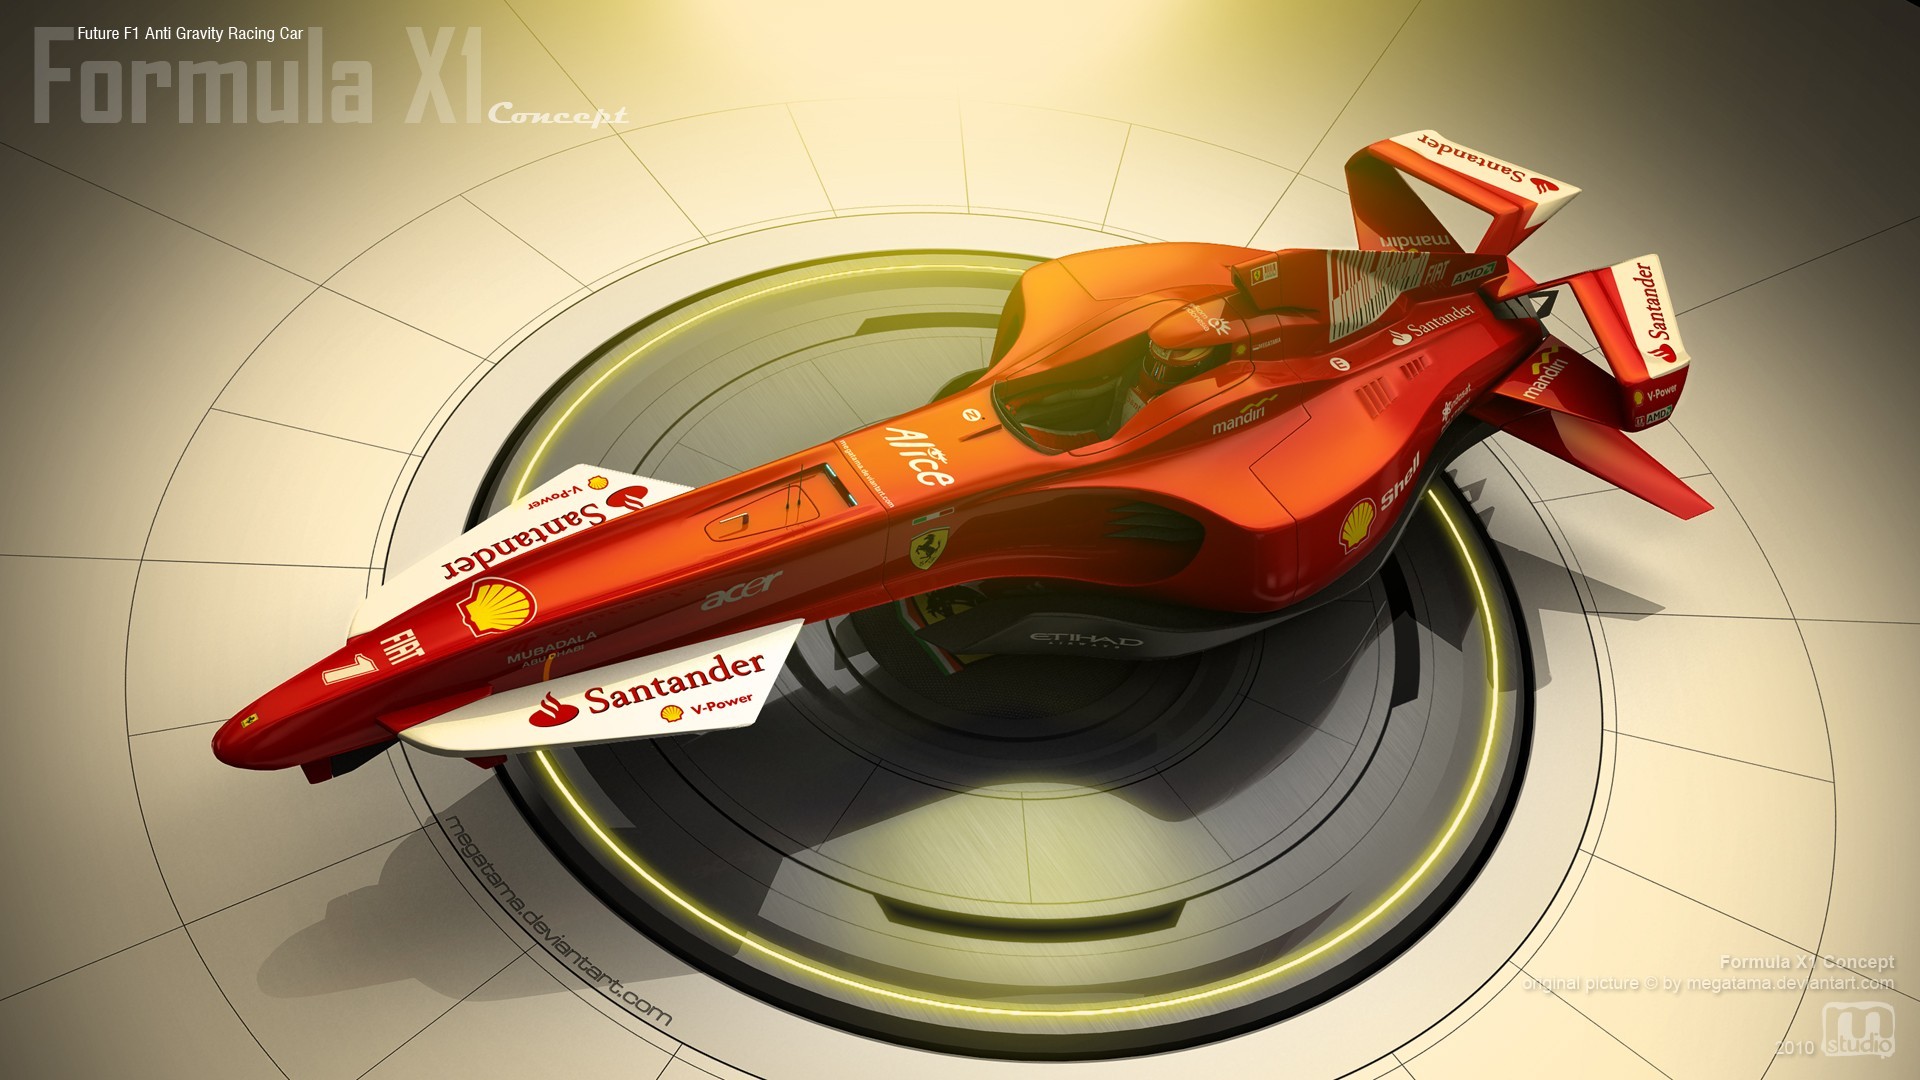 General 1920x1080 Ferrari Formula 1 concept cars red cars vehicle digital art